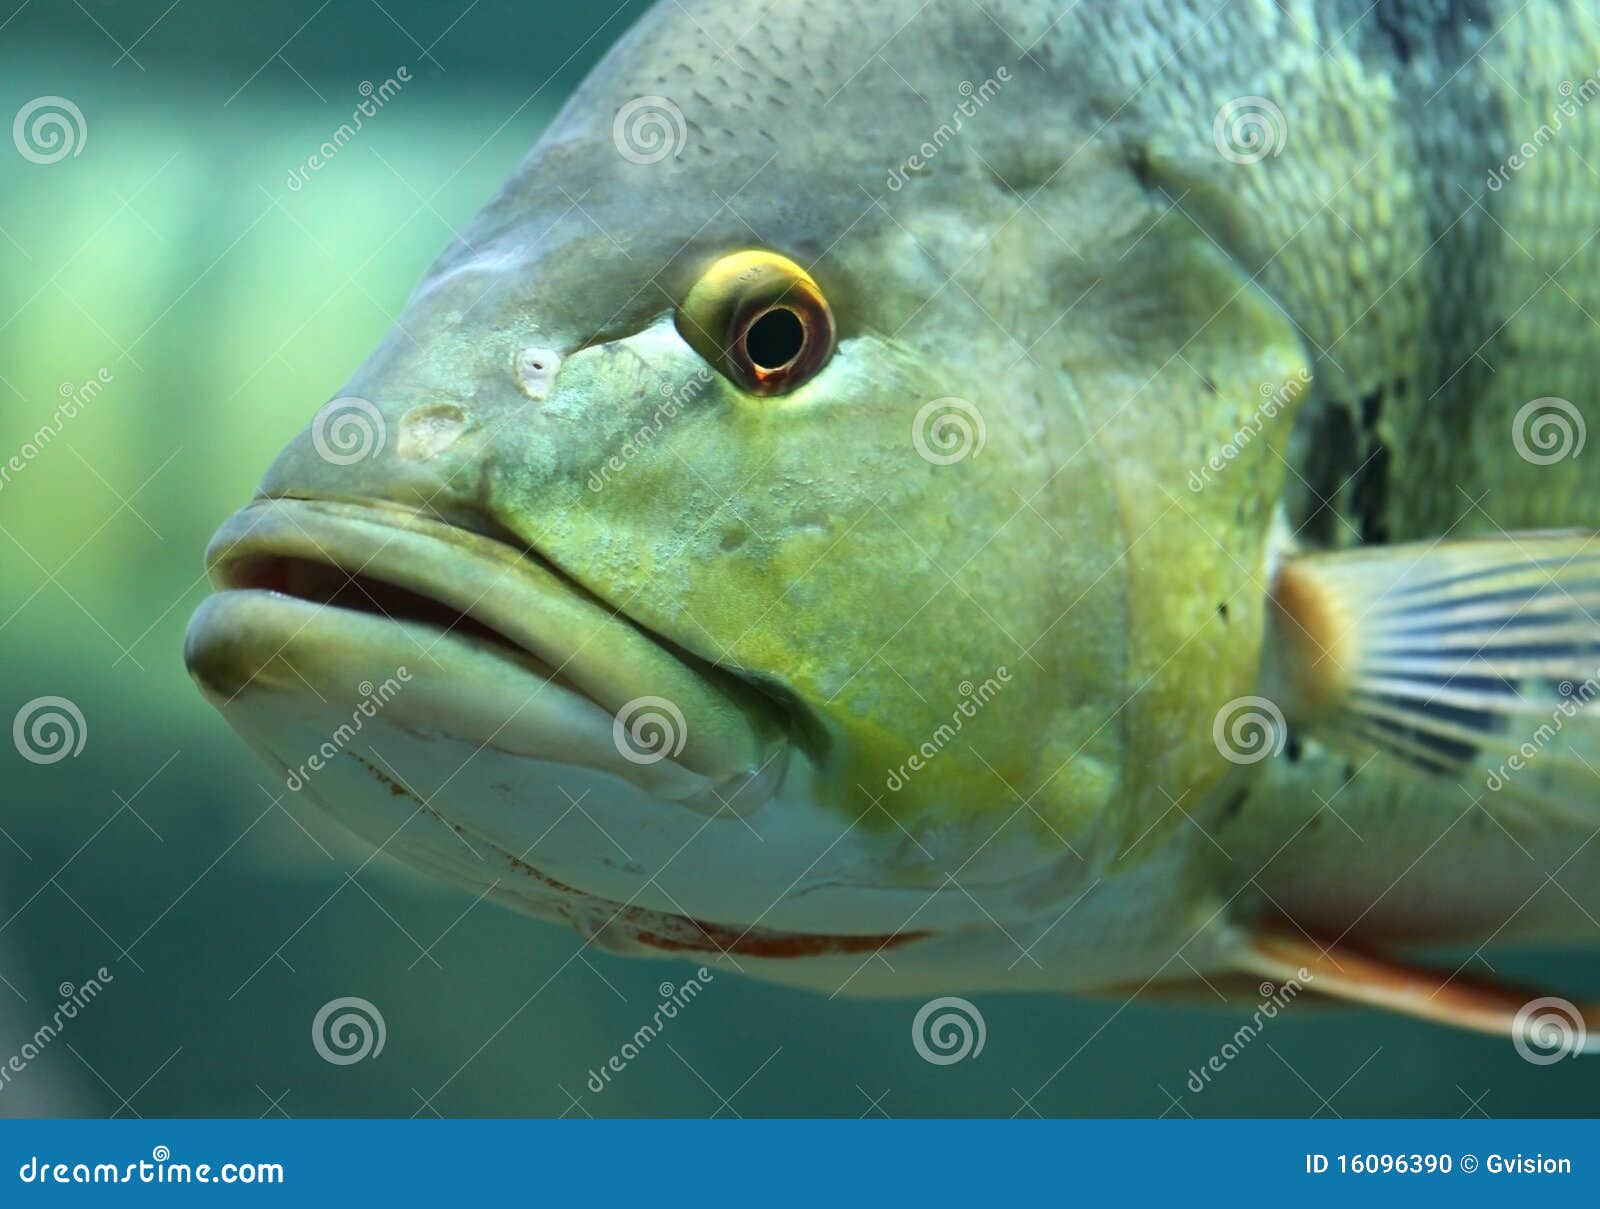 Fish Face stock photo. Image of mouth, detail, aquarium - 16096390